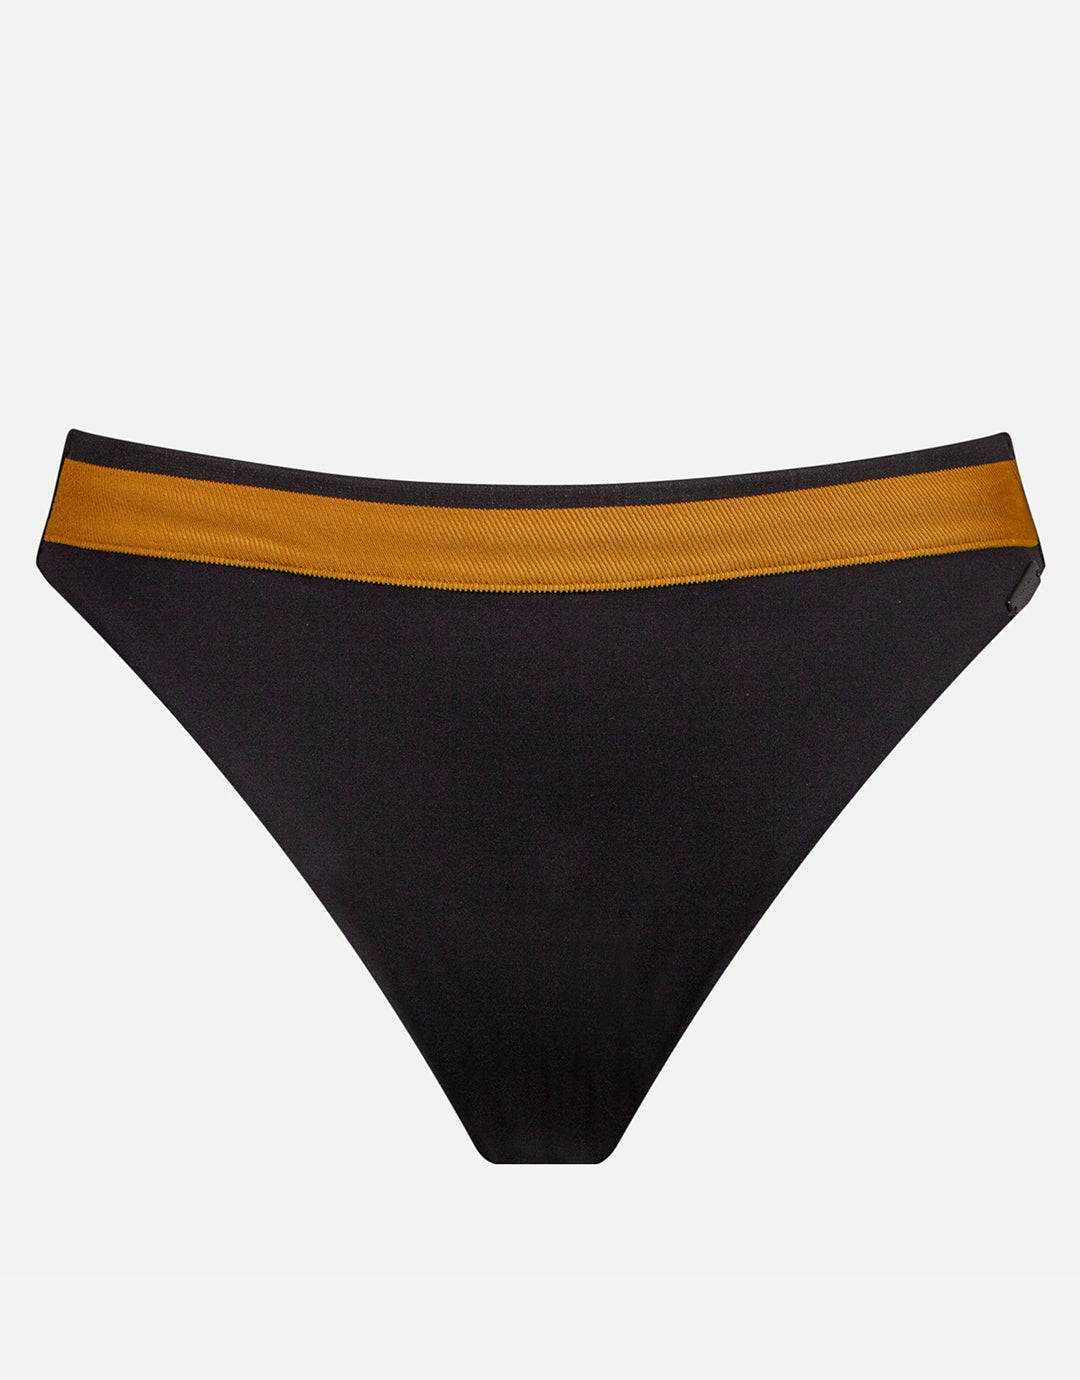 Antagonist Bikini Pant - Black Caramel - Simply Beach UK